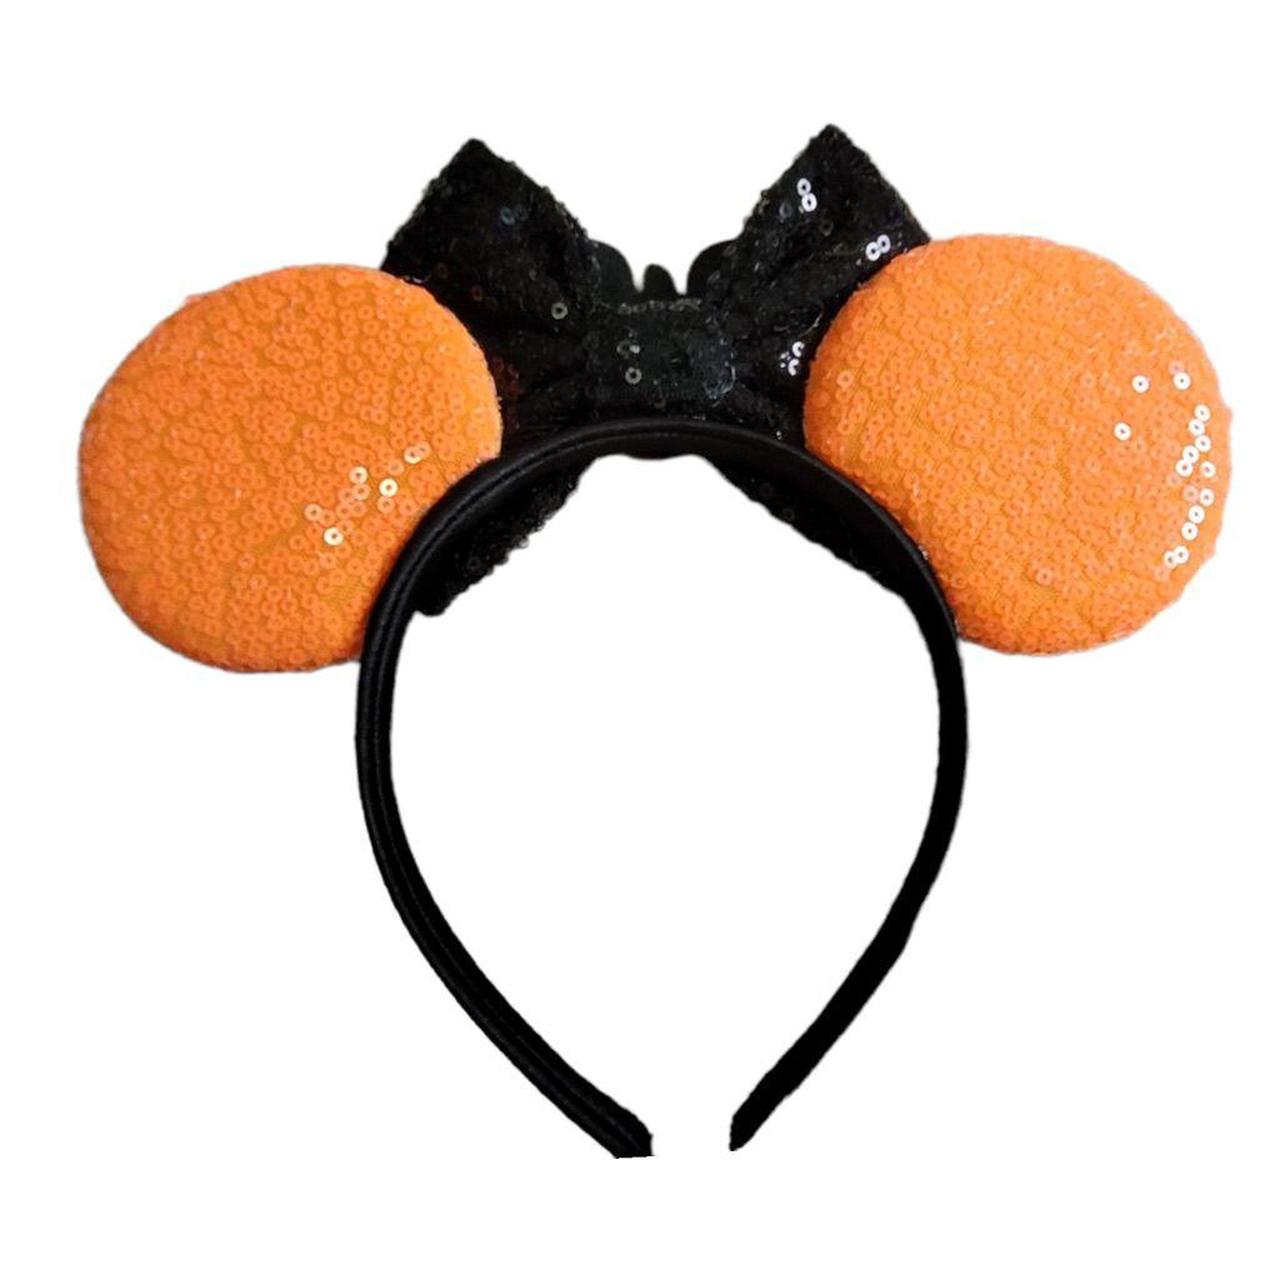 Product Image 3 - New Handmade Halloween Mouse Ears